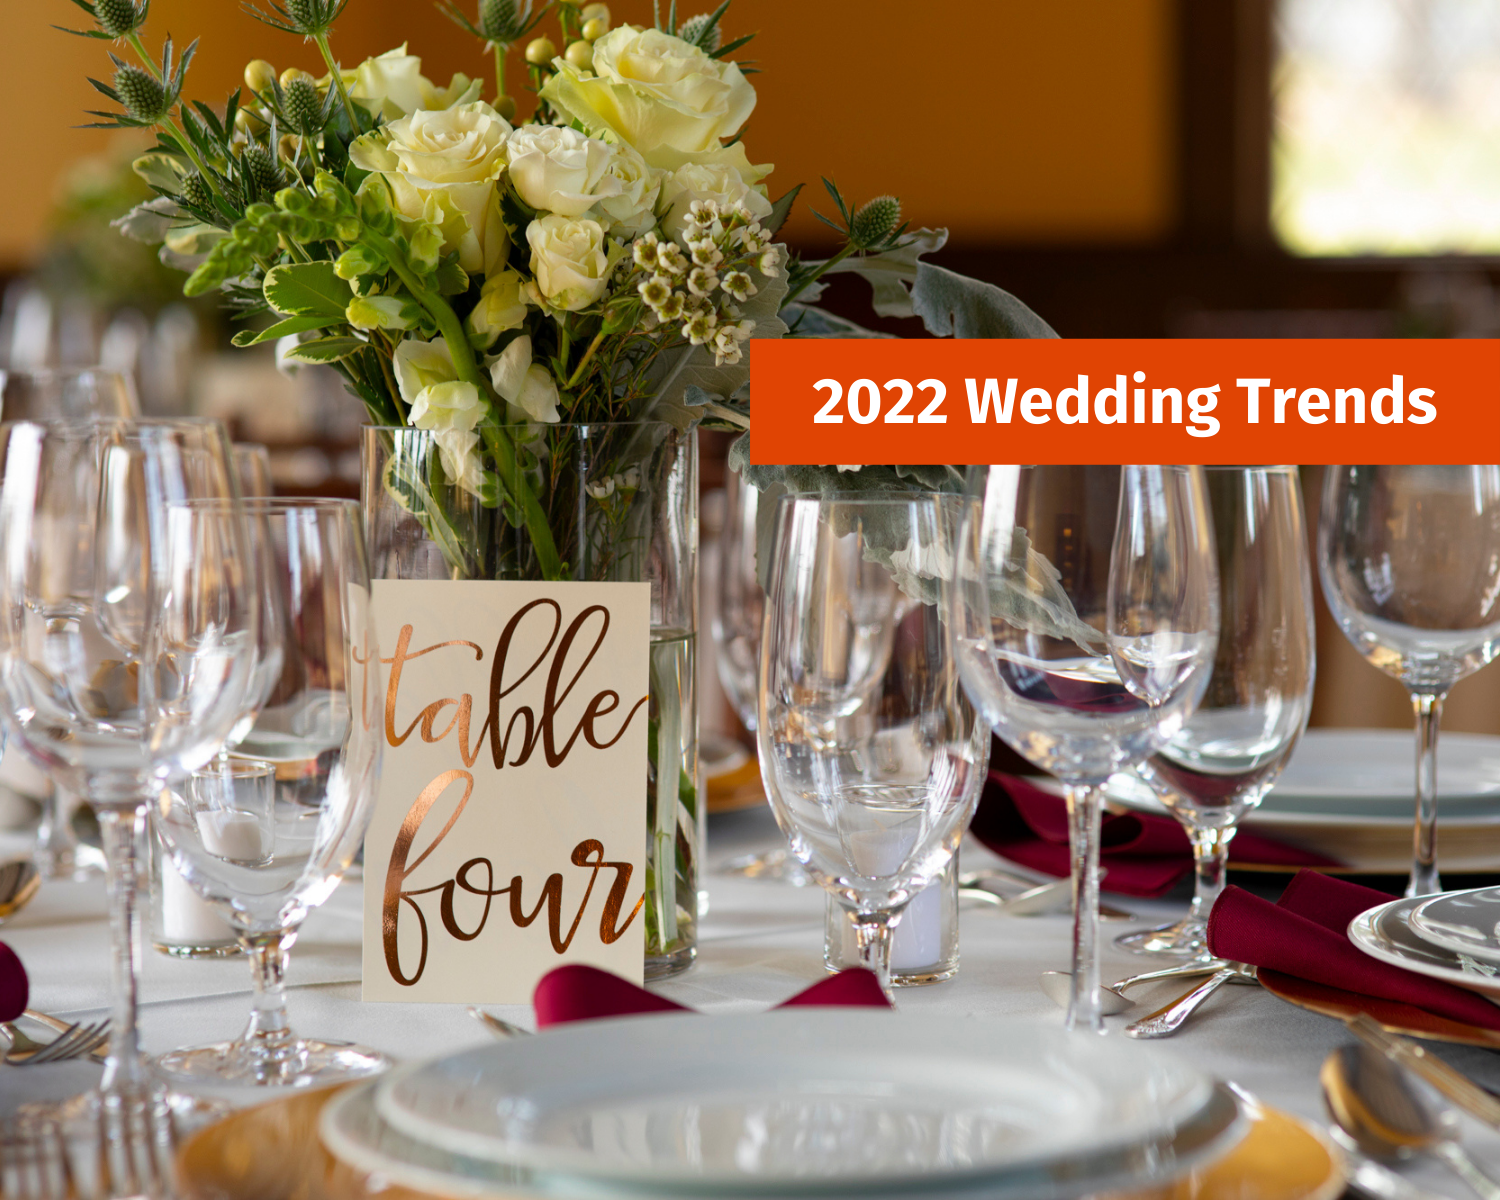 How Will Weddings Look in 2022?